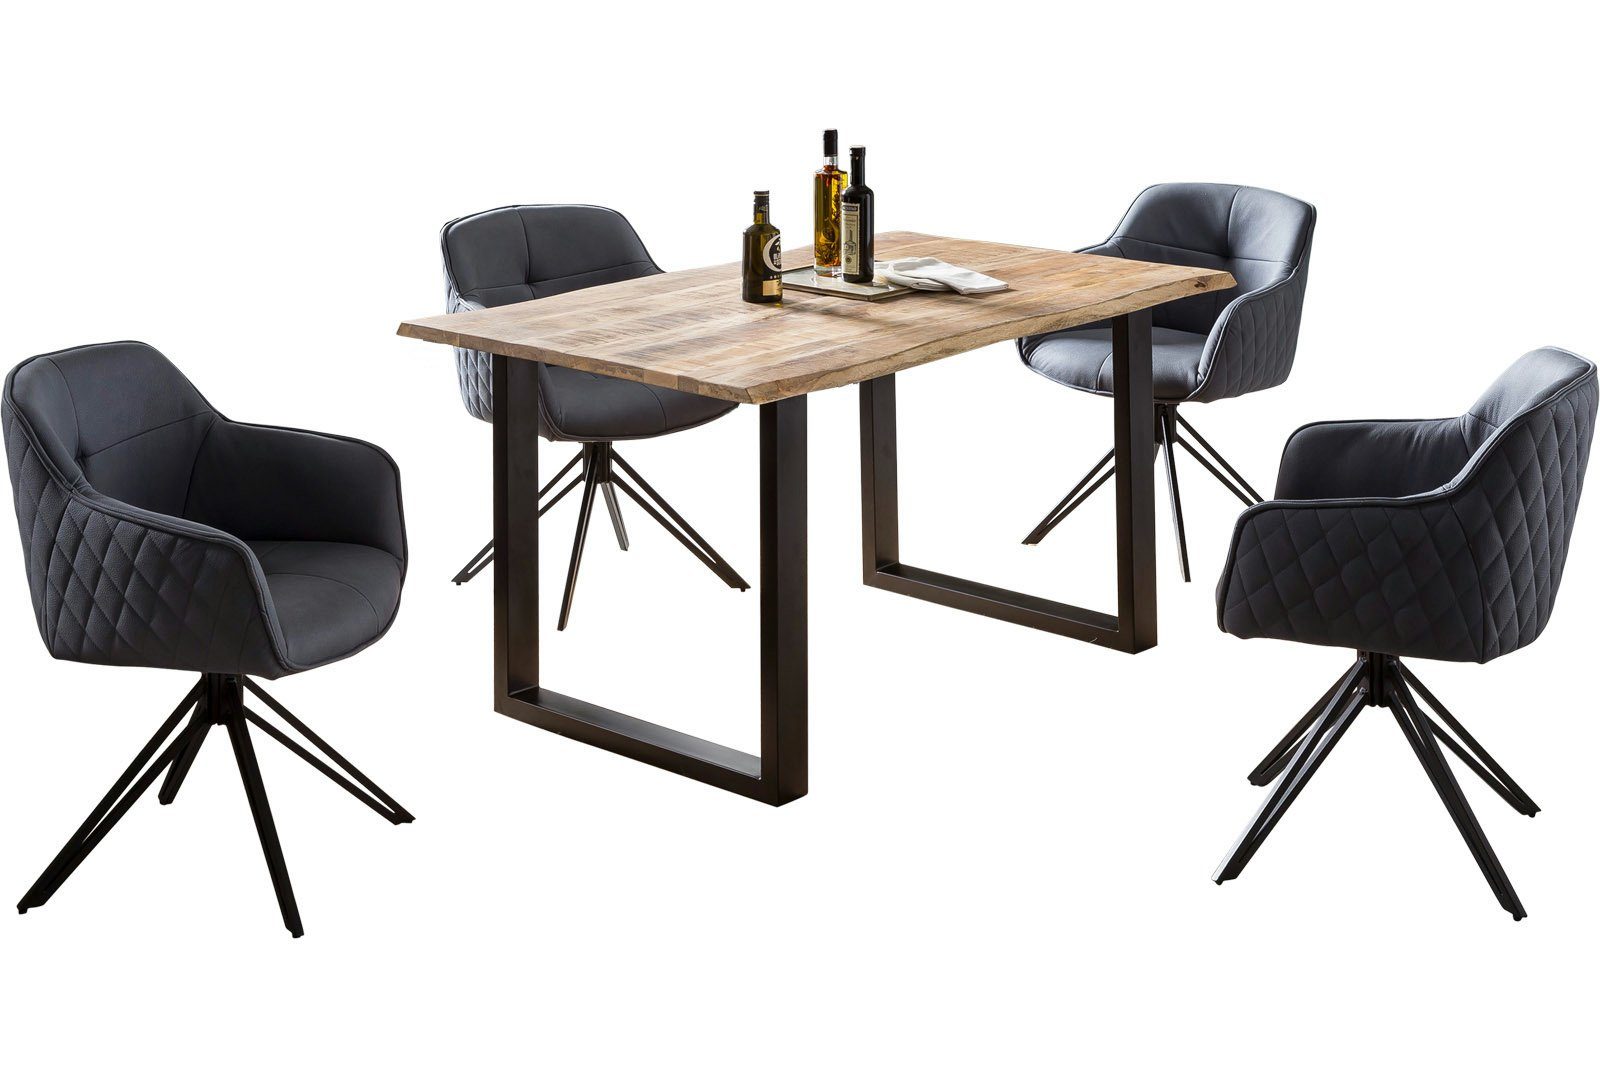 SAM® Essgruppe Jasov, Mangoholz, Baumkante + massiv, aus Stühle 4 Metall U-Gestell